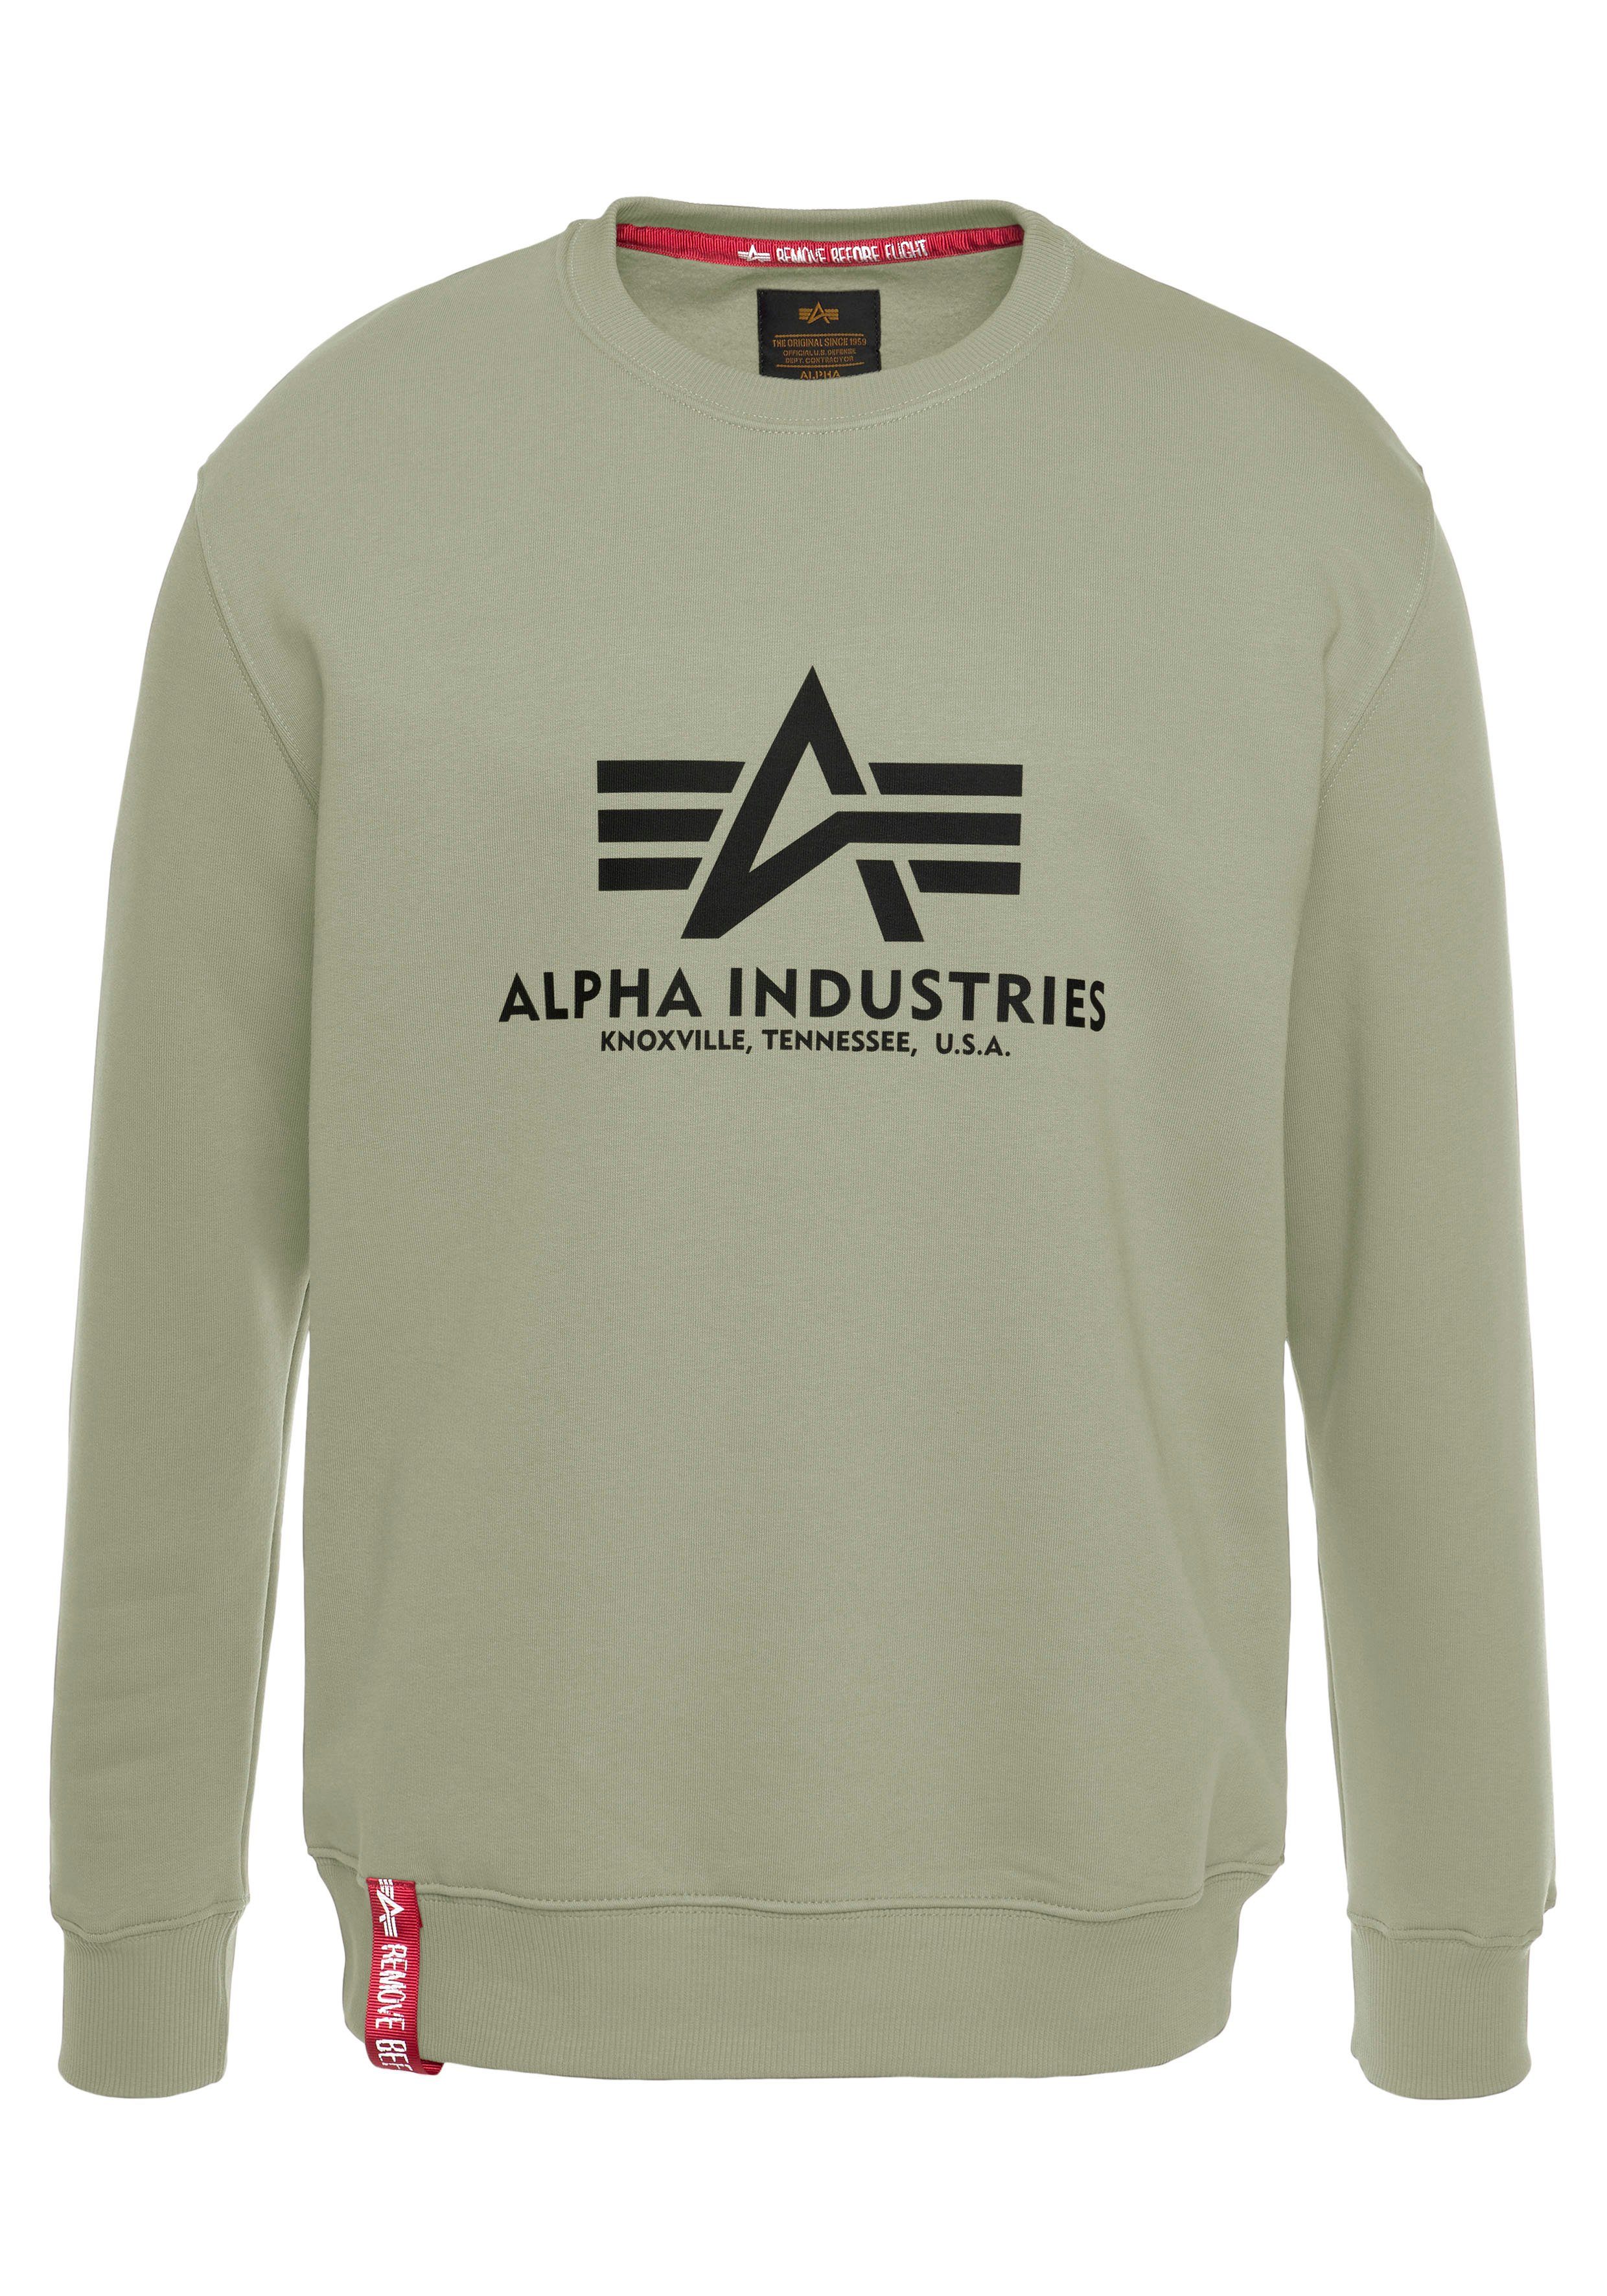 Alpha olive Sweater Sweatshirt Industries Basic